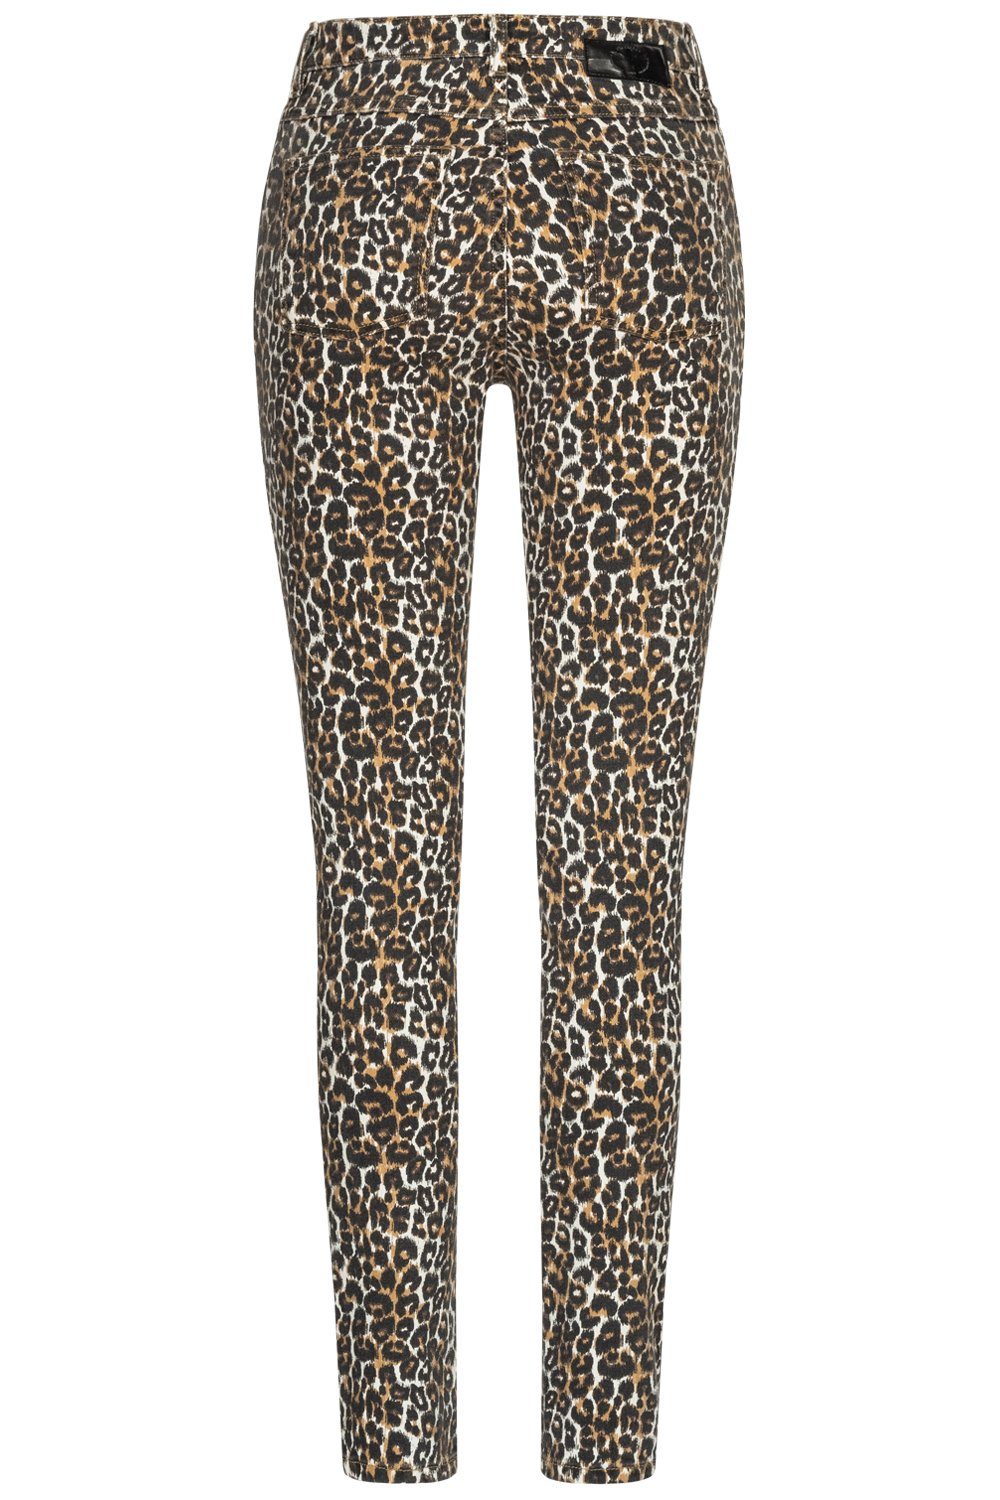 Feuervogl Skinny-fit-Jeans mit Damenjeans Animal, High 5-Pocket-Style, Waist, fv-Han:na, Wild Stretch-Anteil